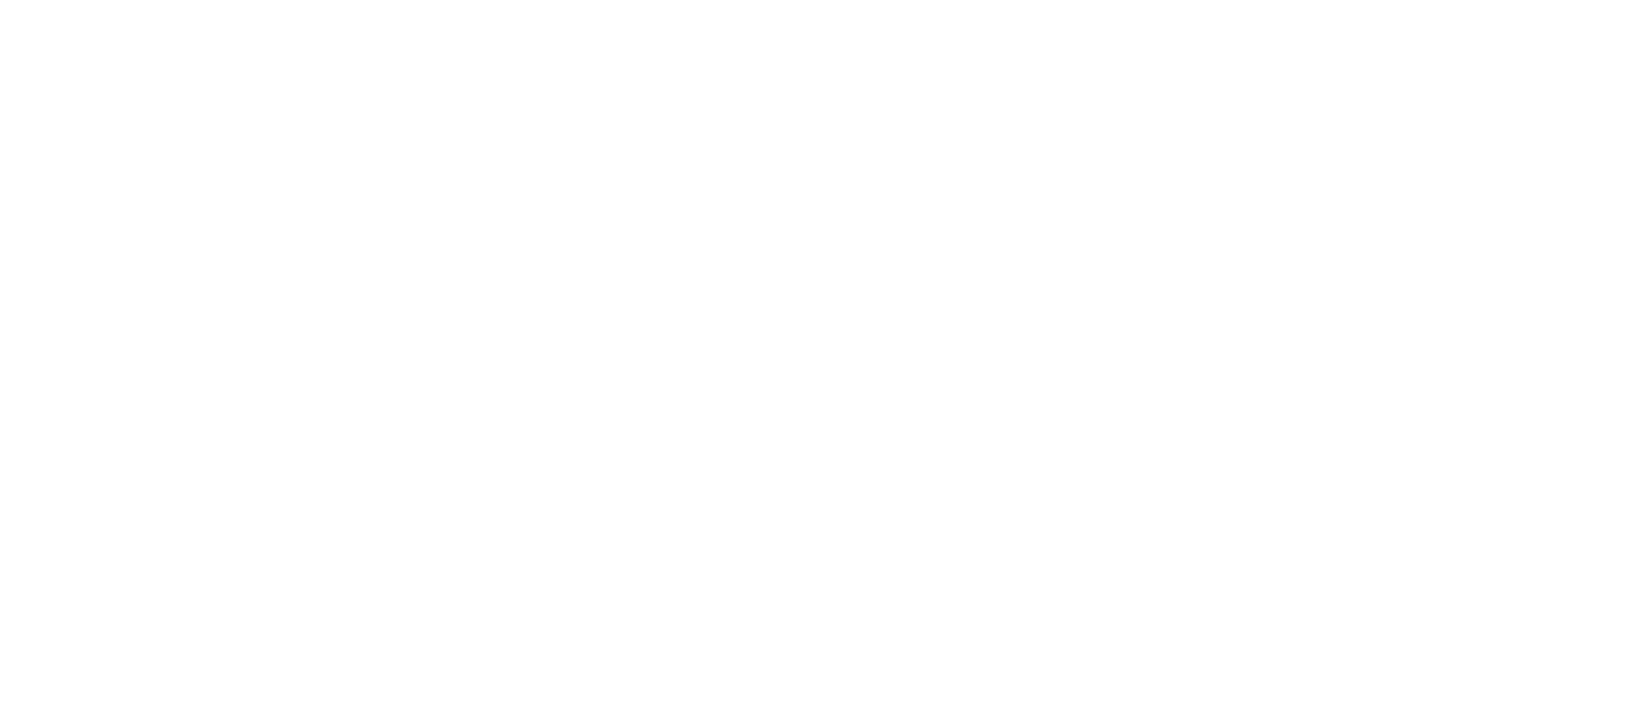 Respect Logo